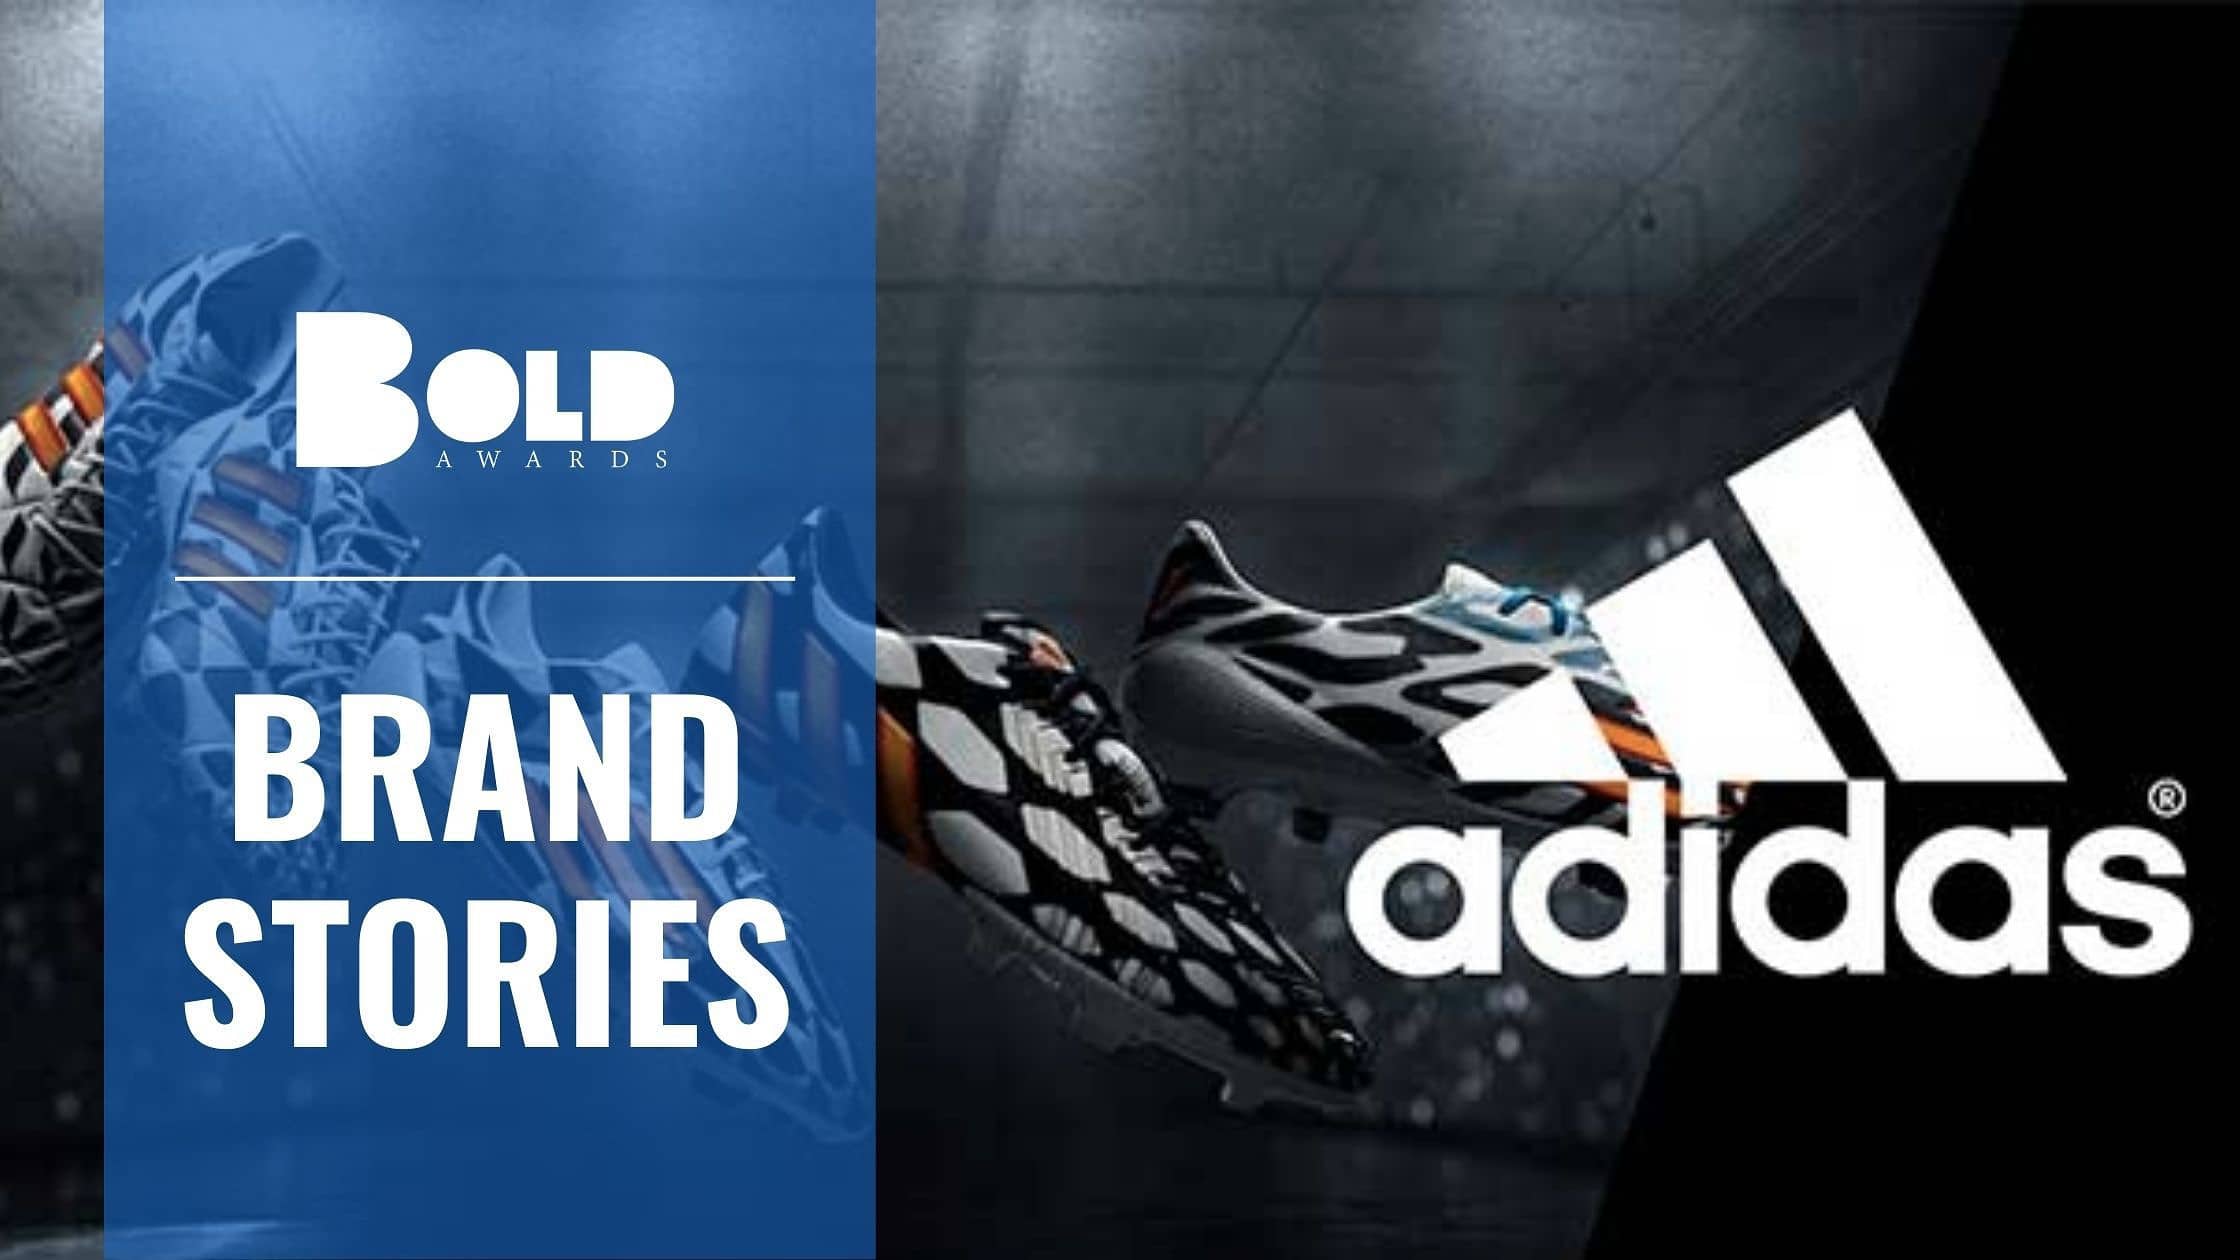 https://bold-awards.com/wp-content/uploads/2020/10/Adidas-Featured-BOLD-Awards.jpg